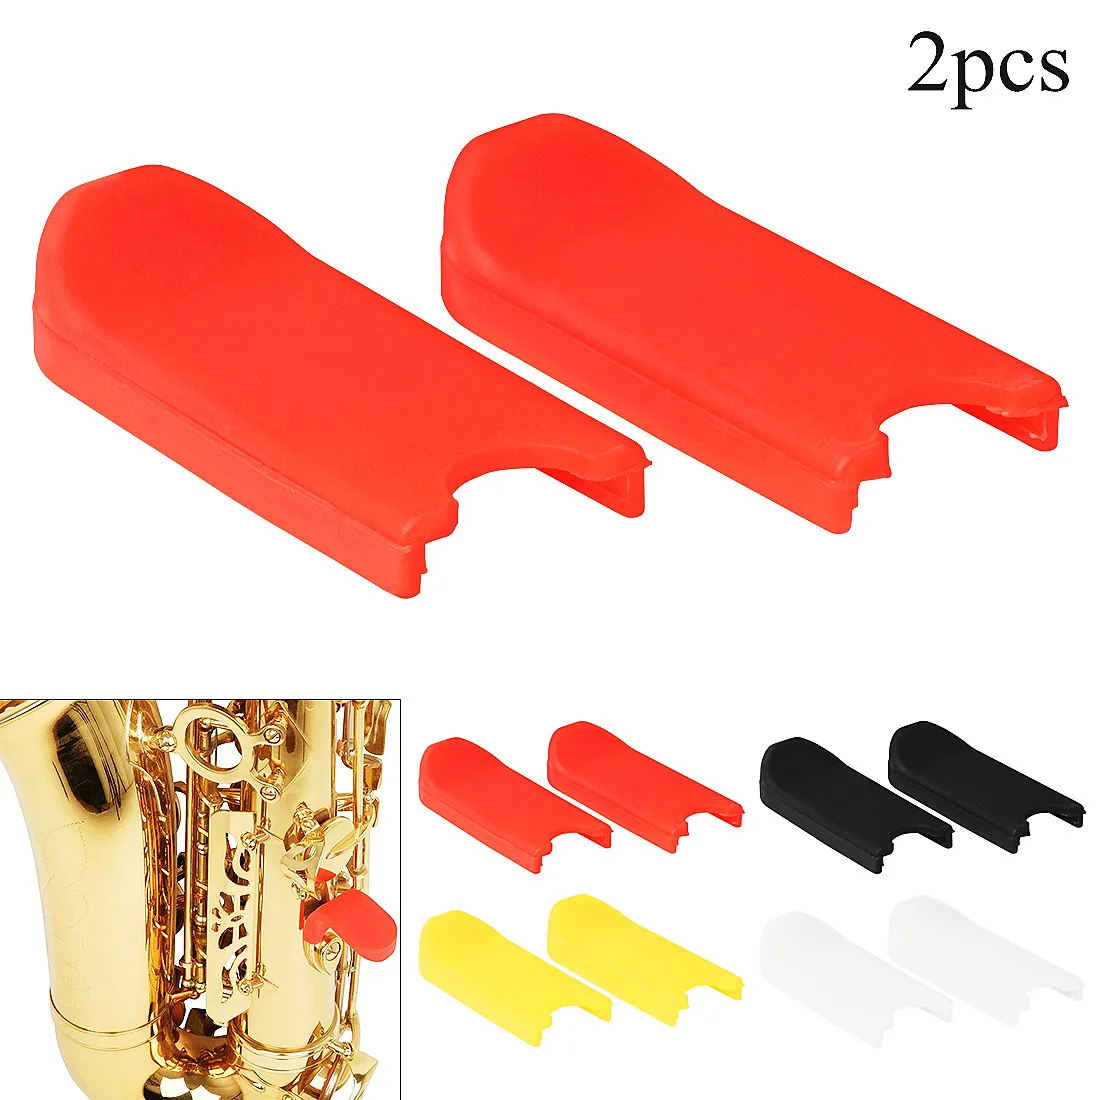 

2pcs Saxophone Thumb Rest Silicone Sax Finger Cushion Pad White / Red / Yellow / Black Optional